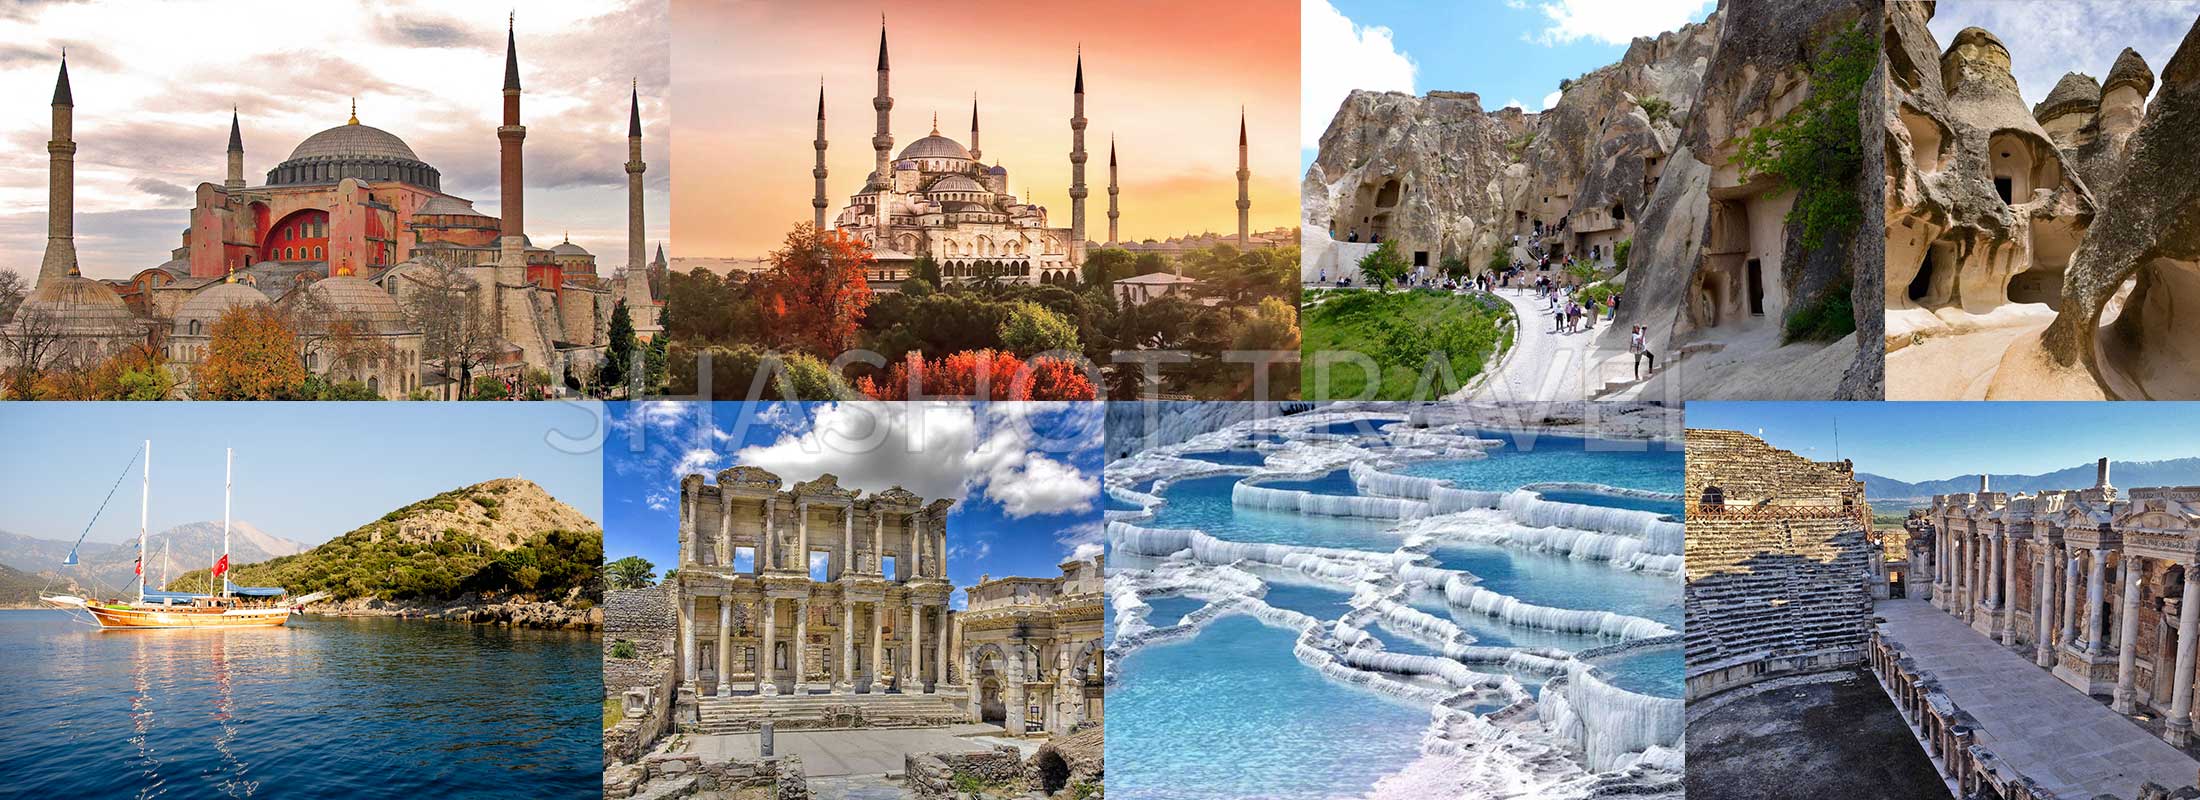 turquia-excursion-tours-12-dias-estambul-santa-sofia-museo-azul-mezquita-capadocia-azul-crucero-olimpos-fethiye-efeso-pamukkale-shashot-travel